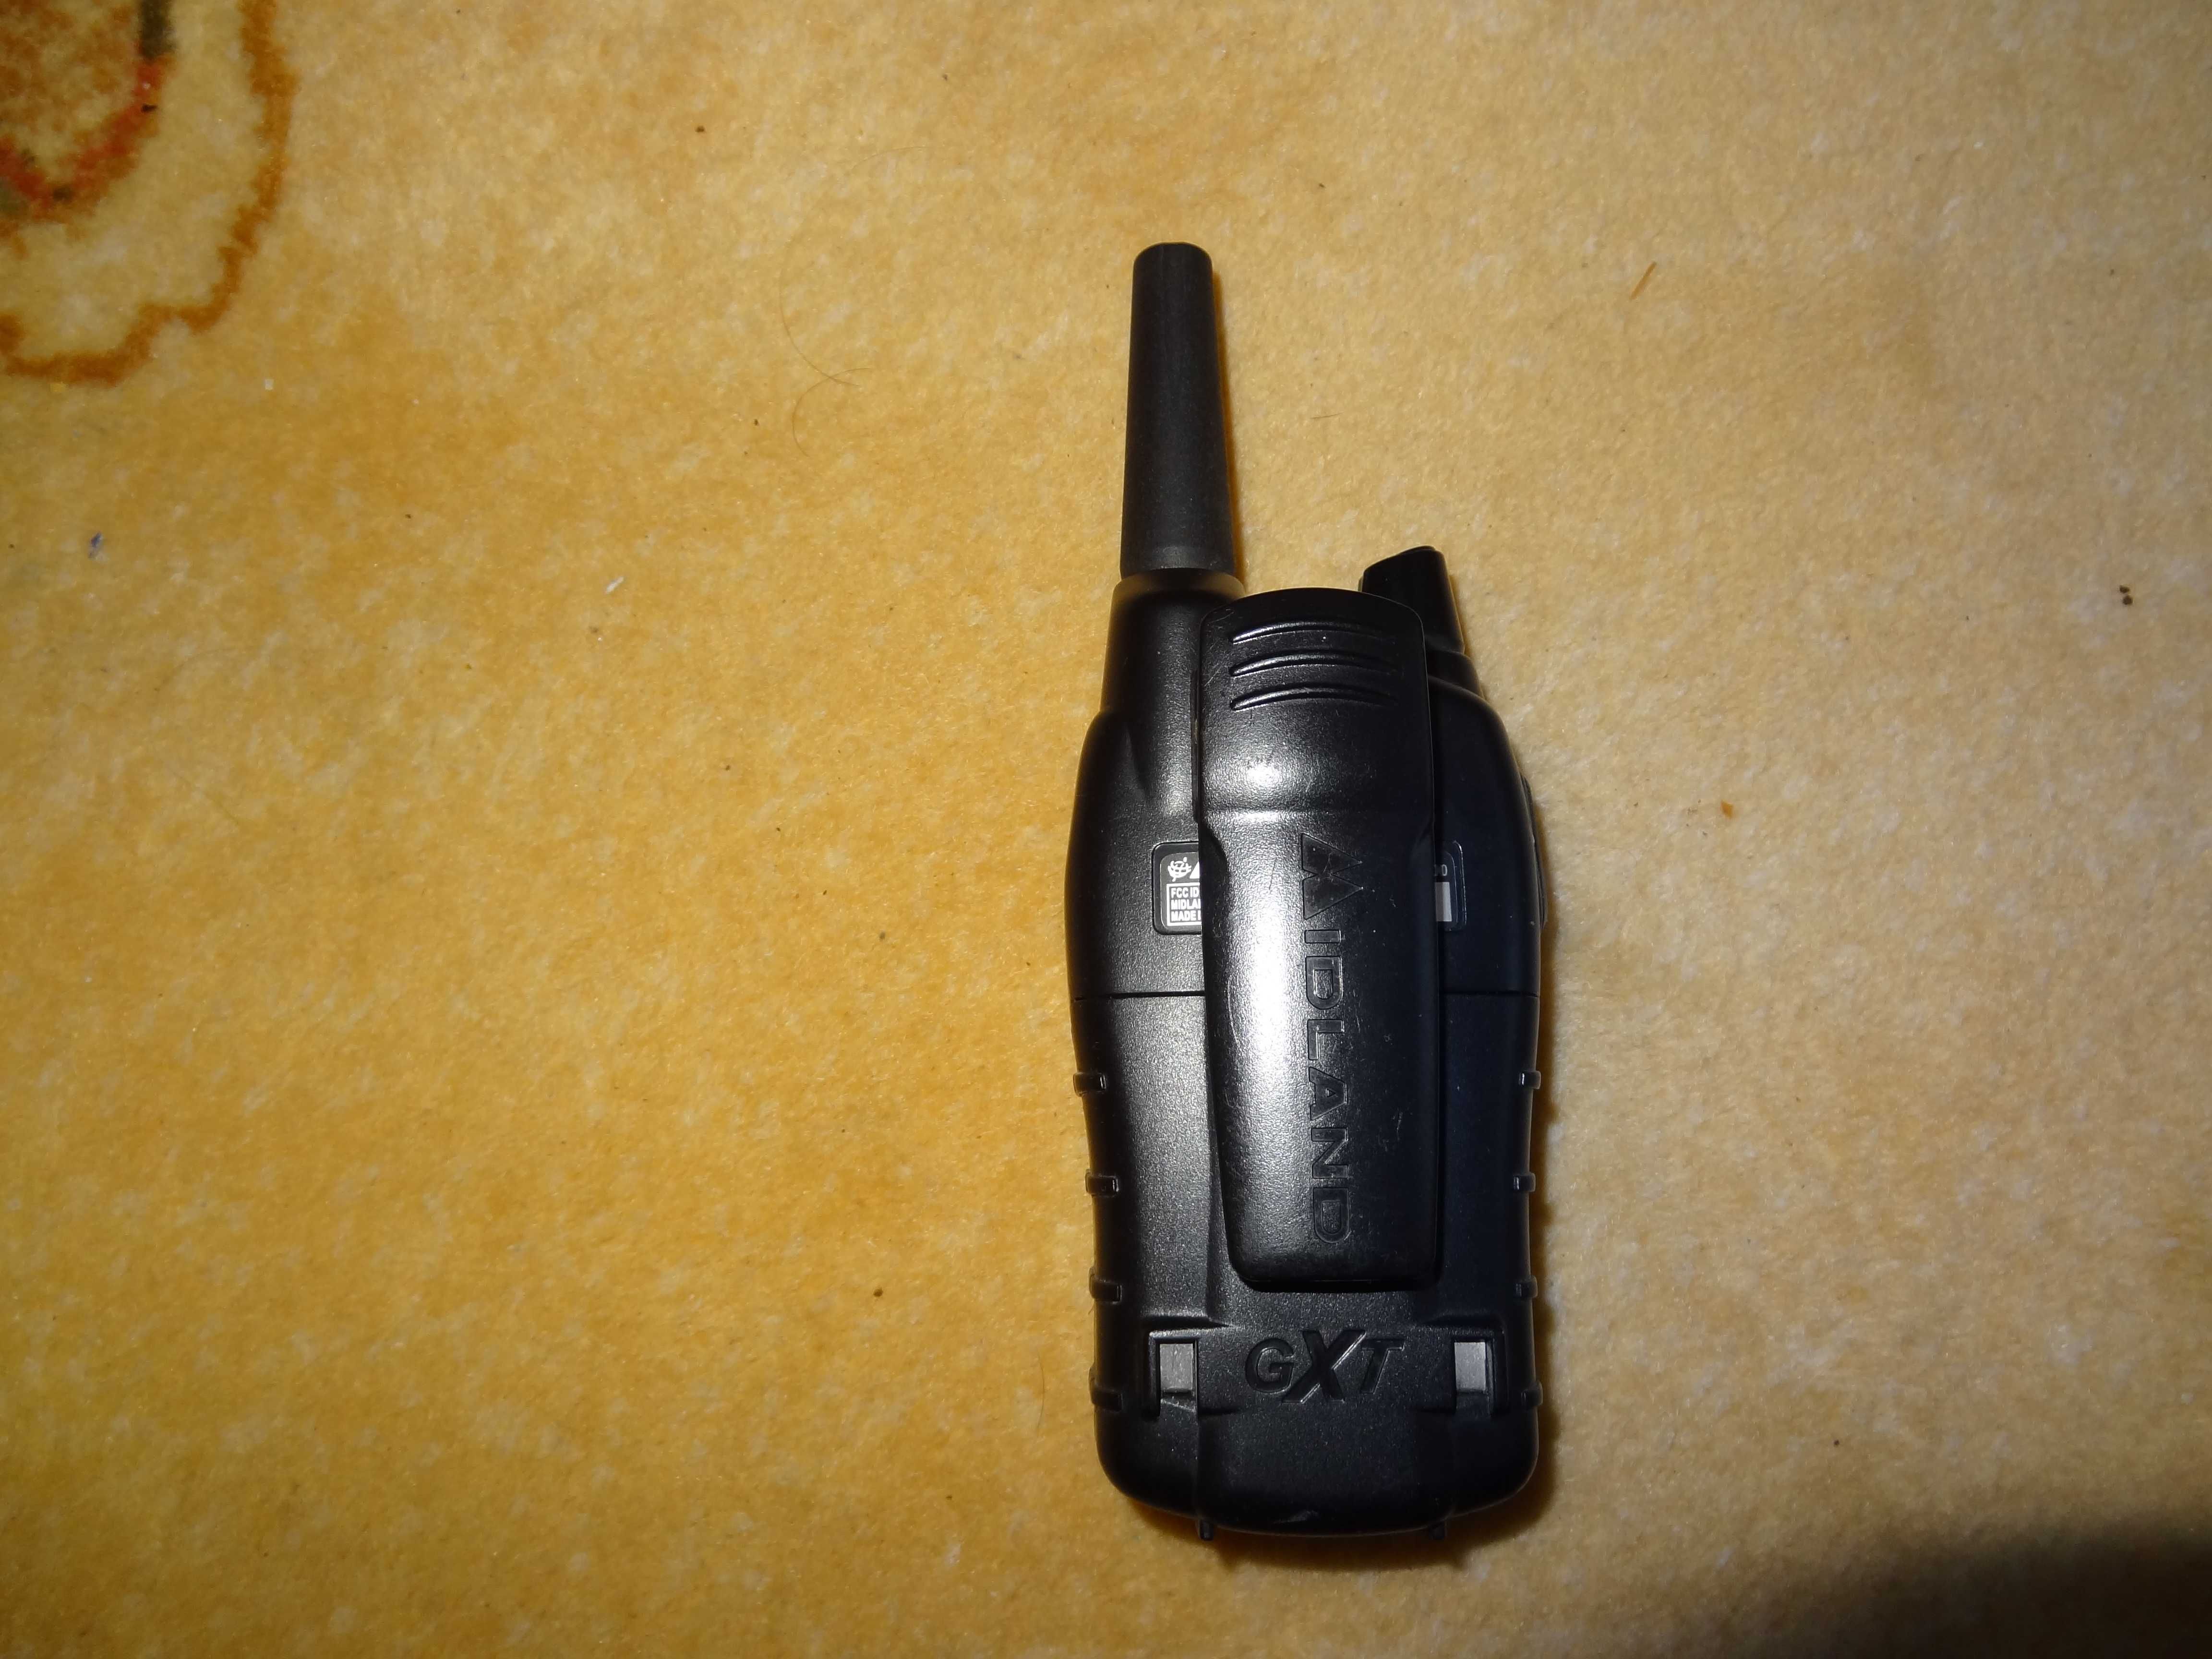 Radiotelefon Midland gxt500